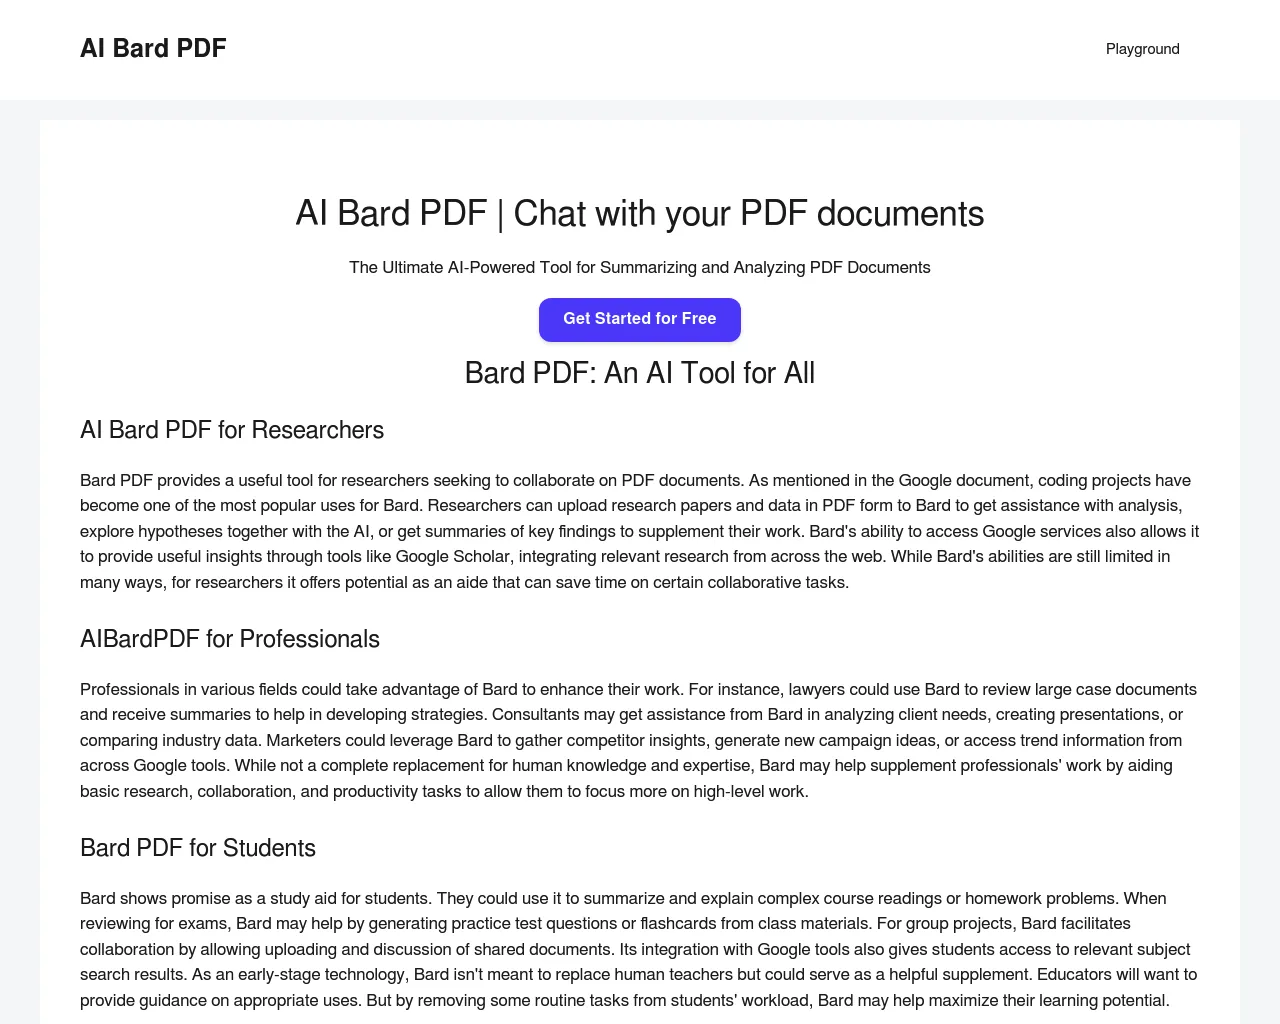 Bard PDF